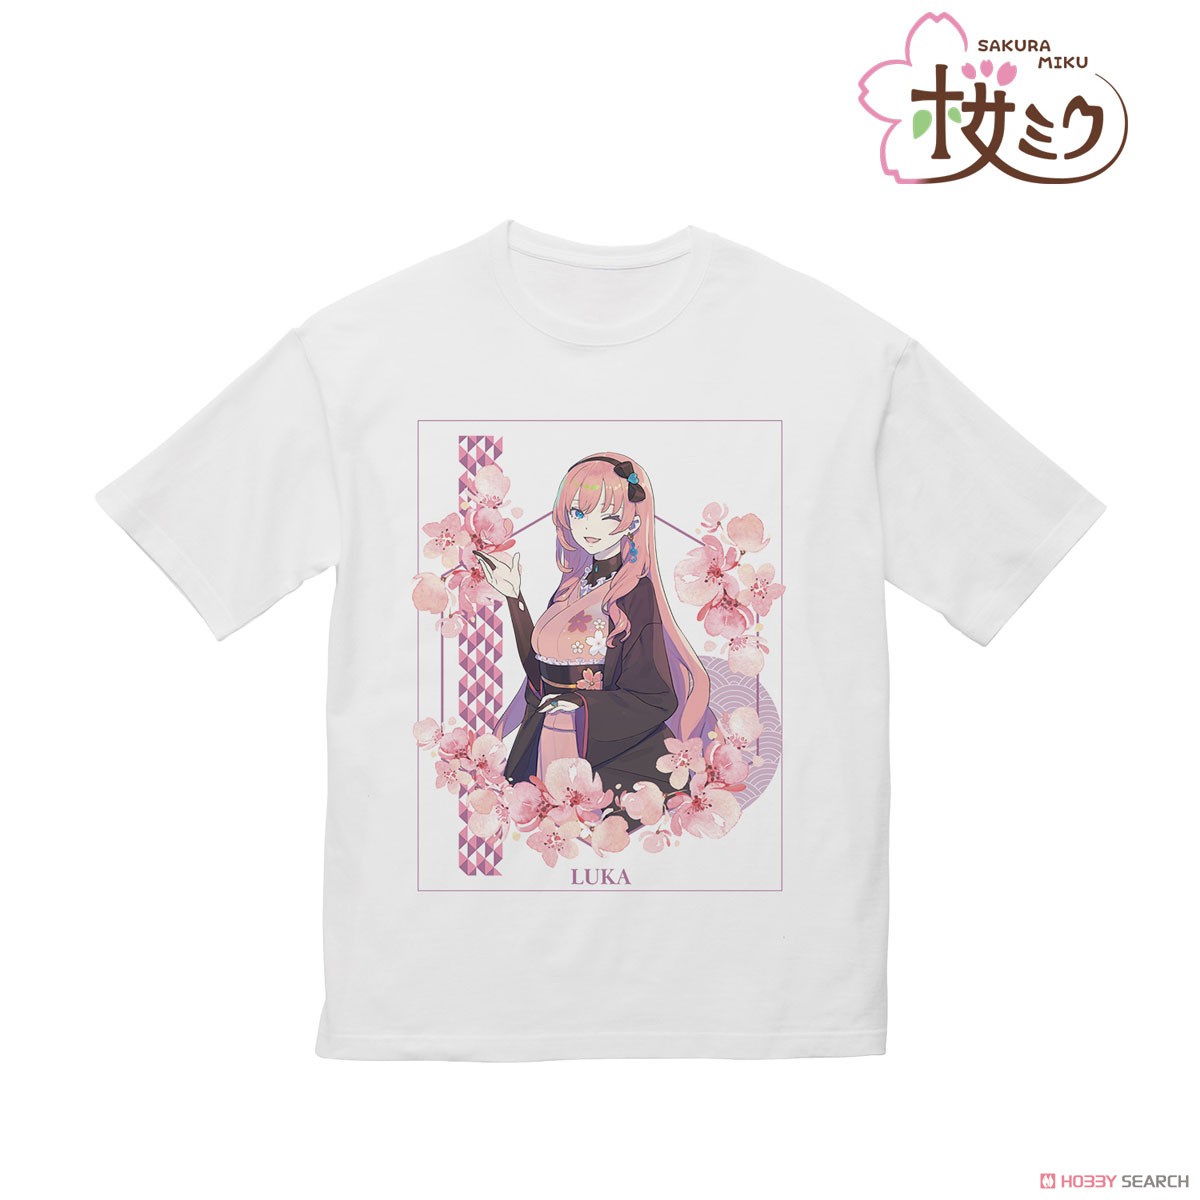 Sakura Miku [Especially Illustrated] Megurine Luka Art by Kuro Big Silhouette T-Shirt Unisex XL (Anime Toy) Item picture1